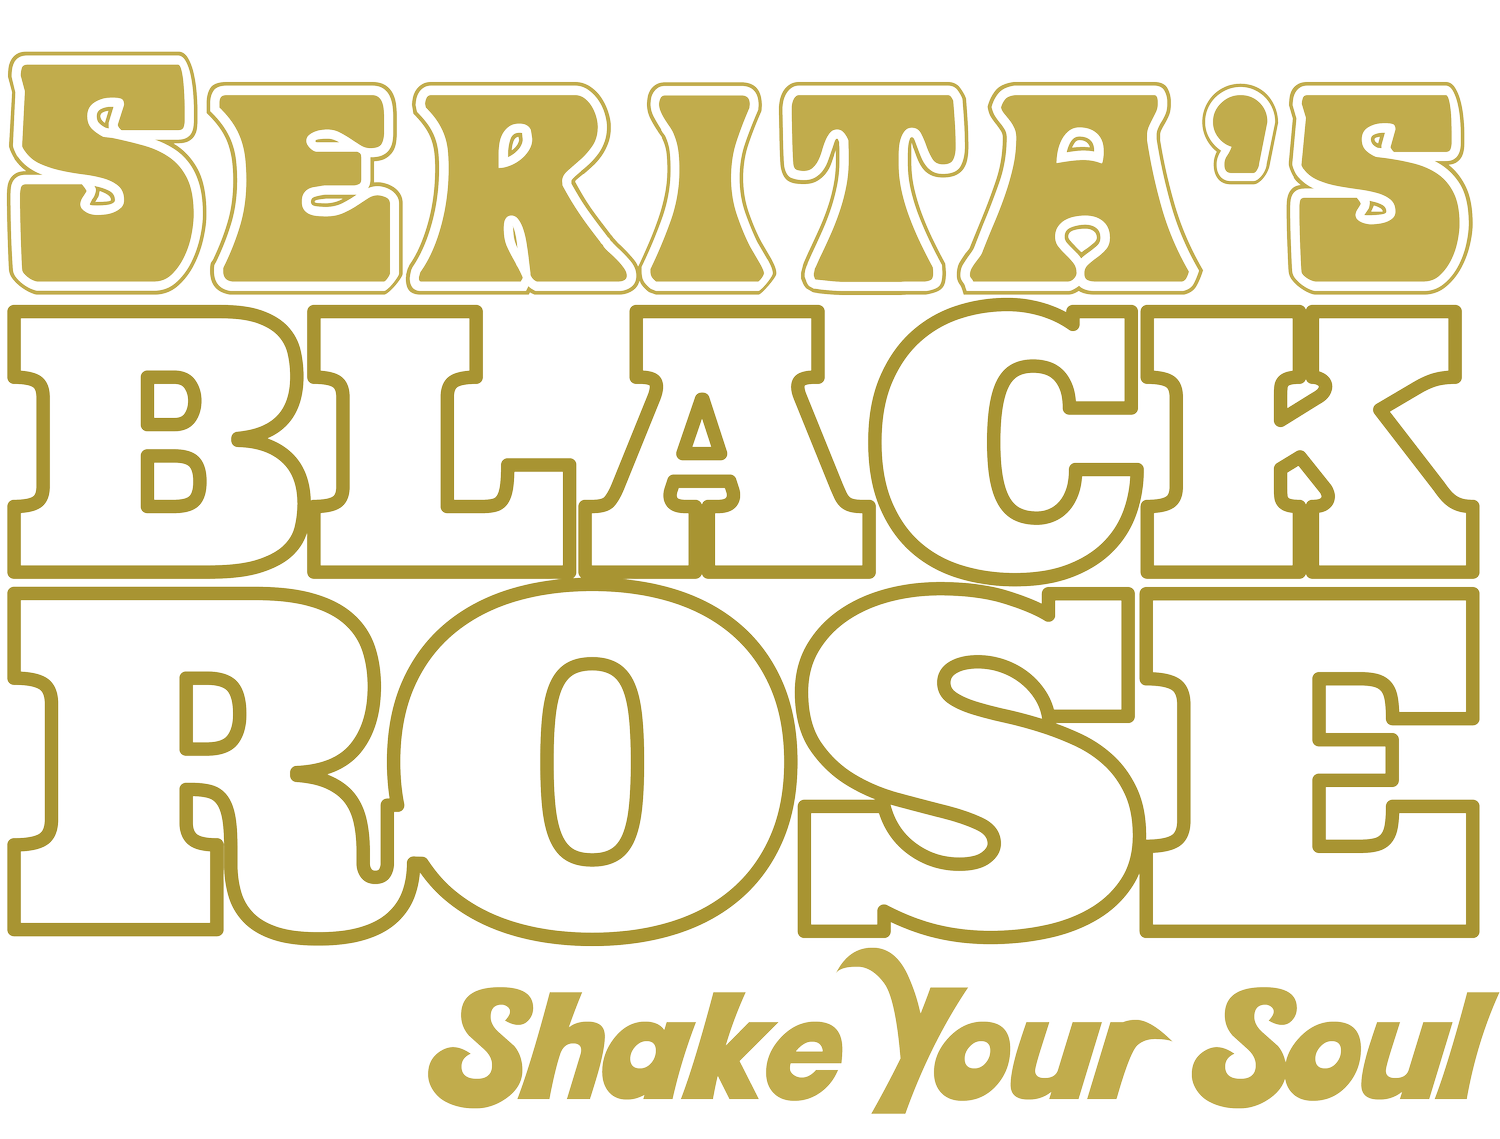 Serita's Black Rose